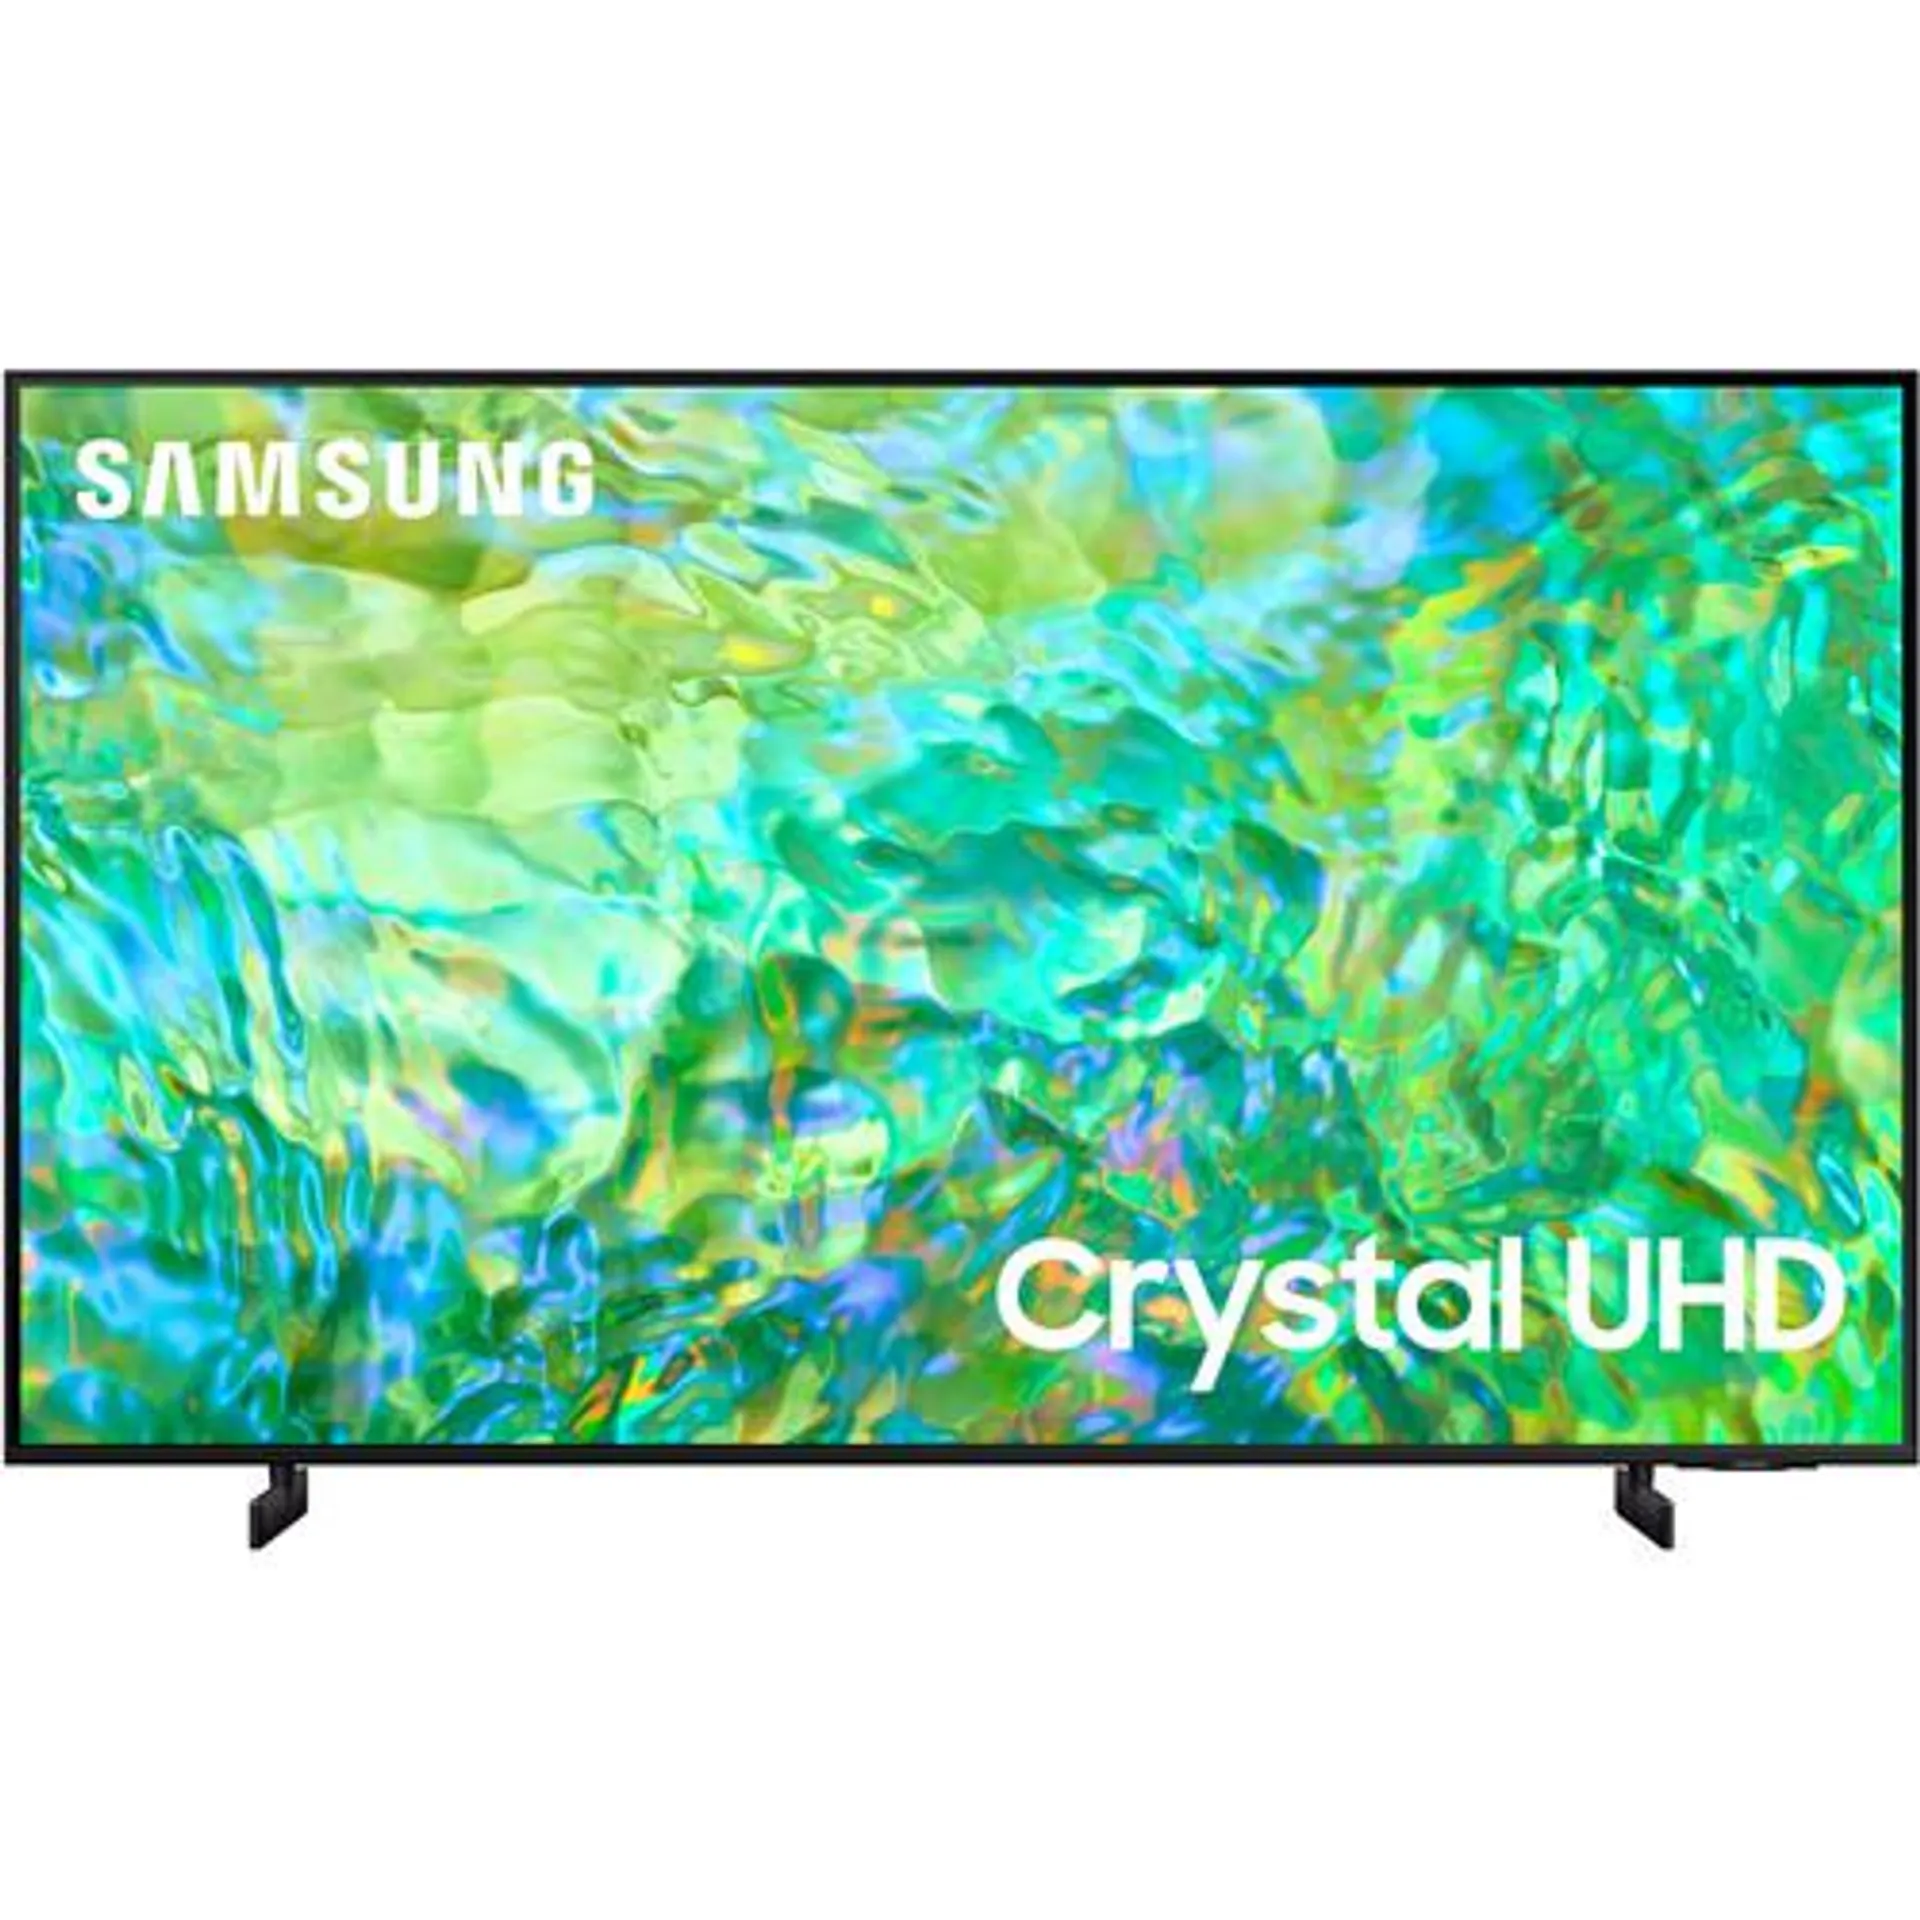 Samsung CU8000 Crystal UHD 85" 4K HDR Smart LED TV